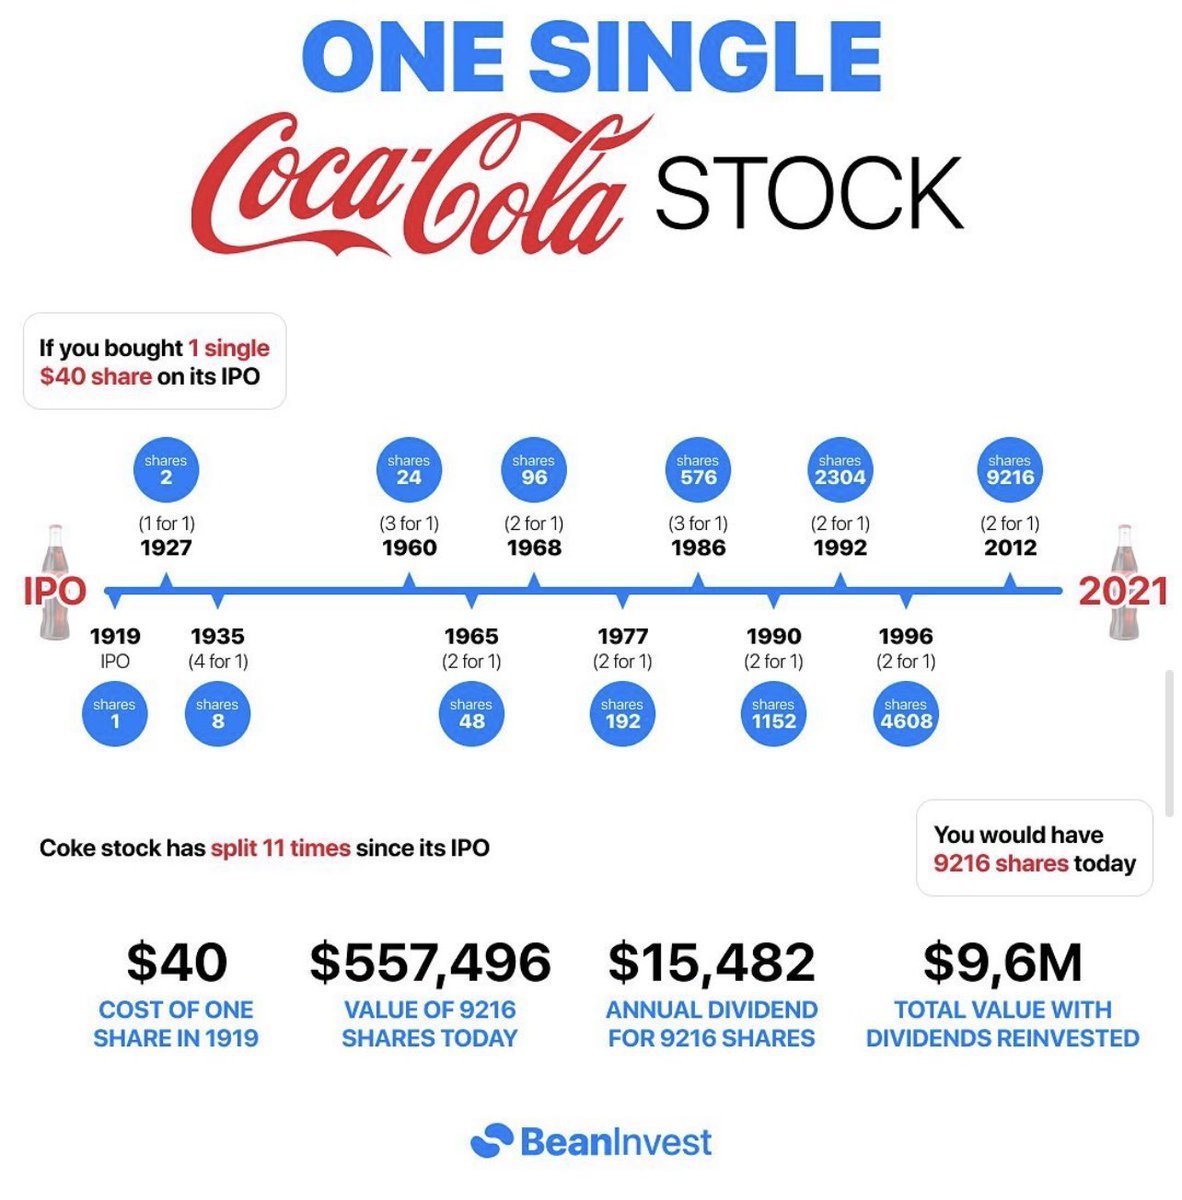 One Single Coca-Cola Stock: